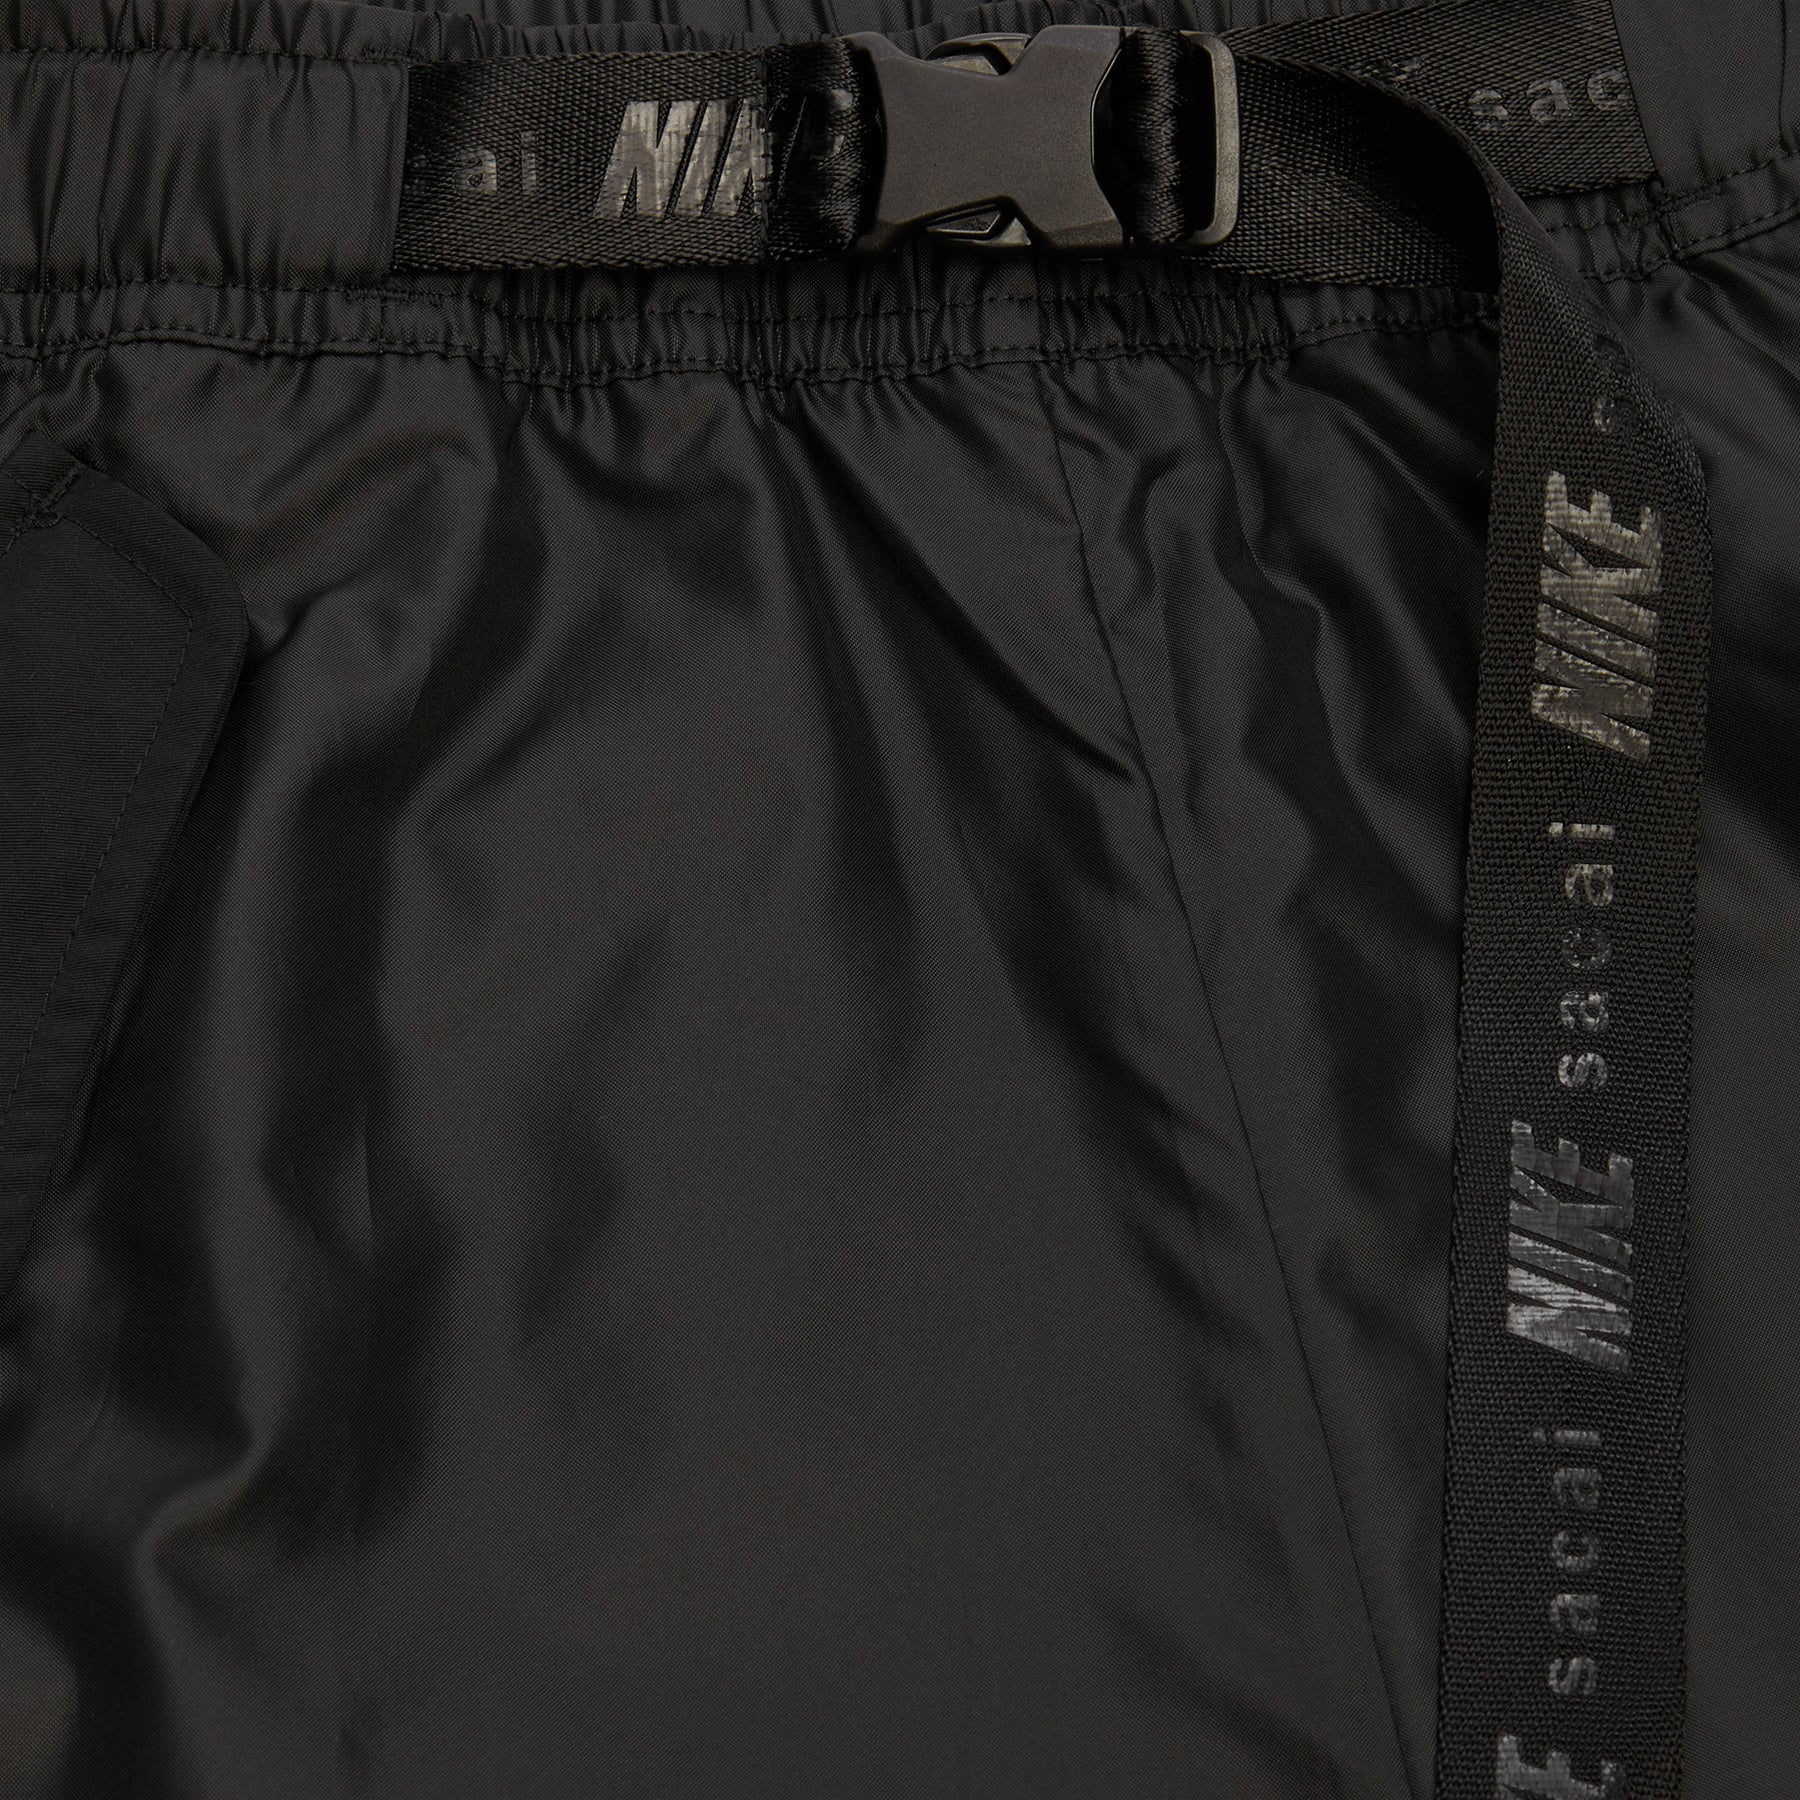 Nike x Sacai Pant (Black) – Concepts